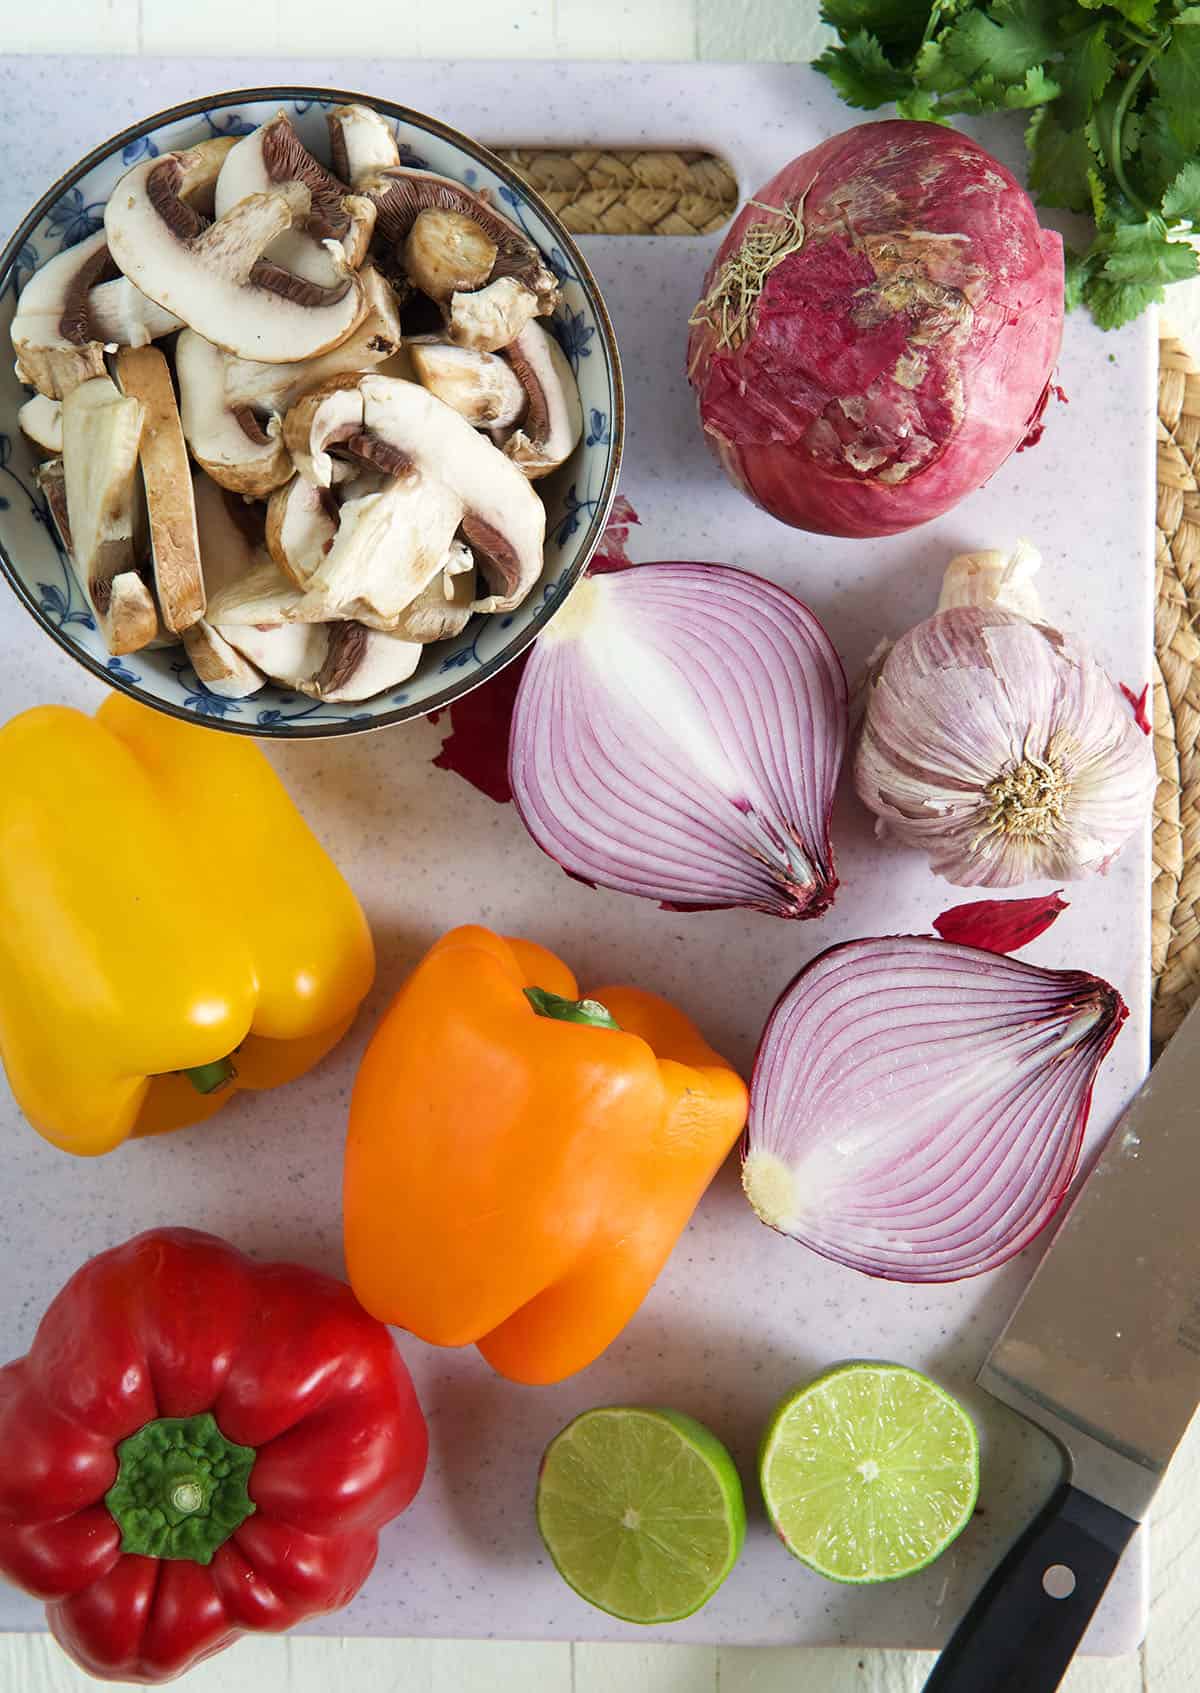 The ingredients for fajita veggies are presented on a cutting board.